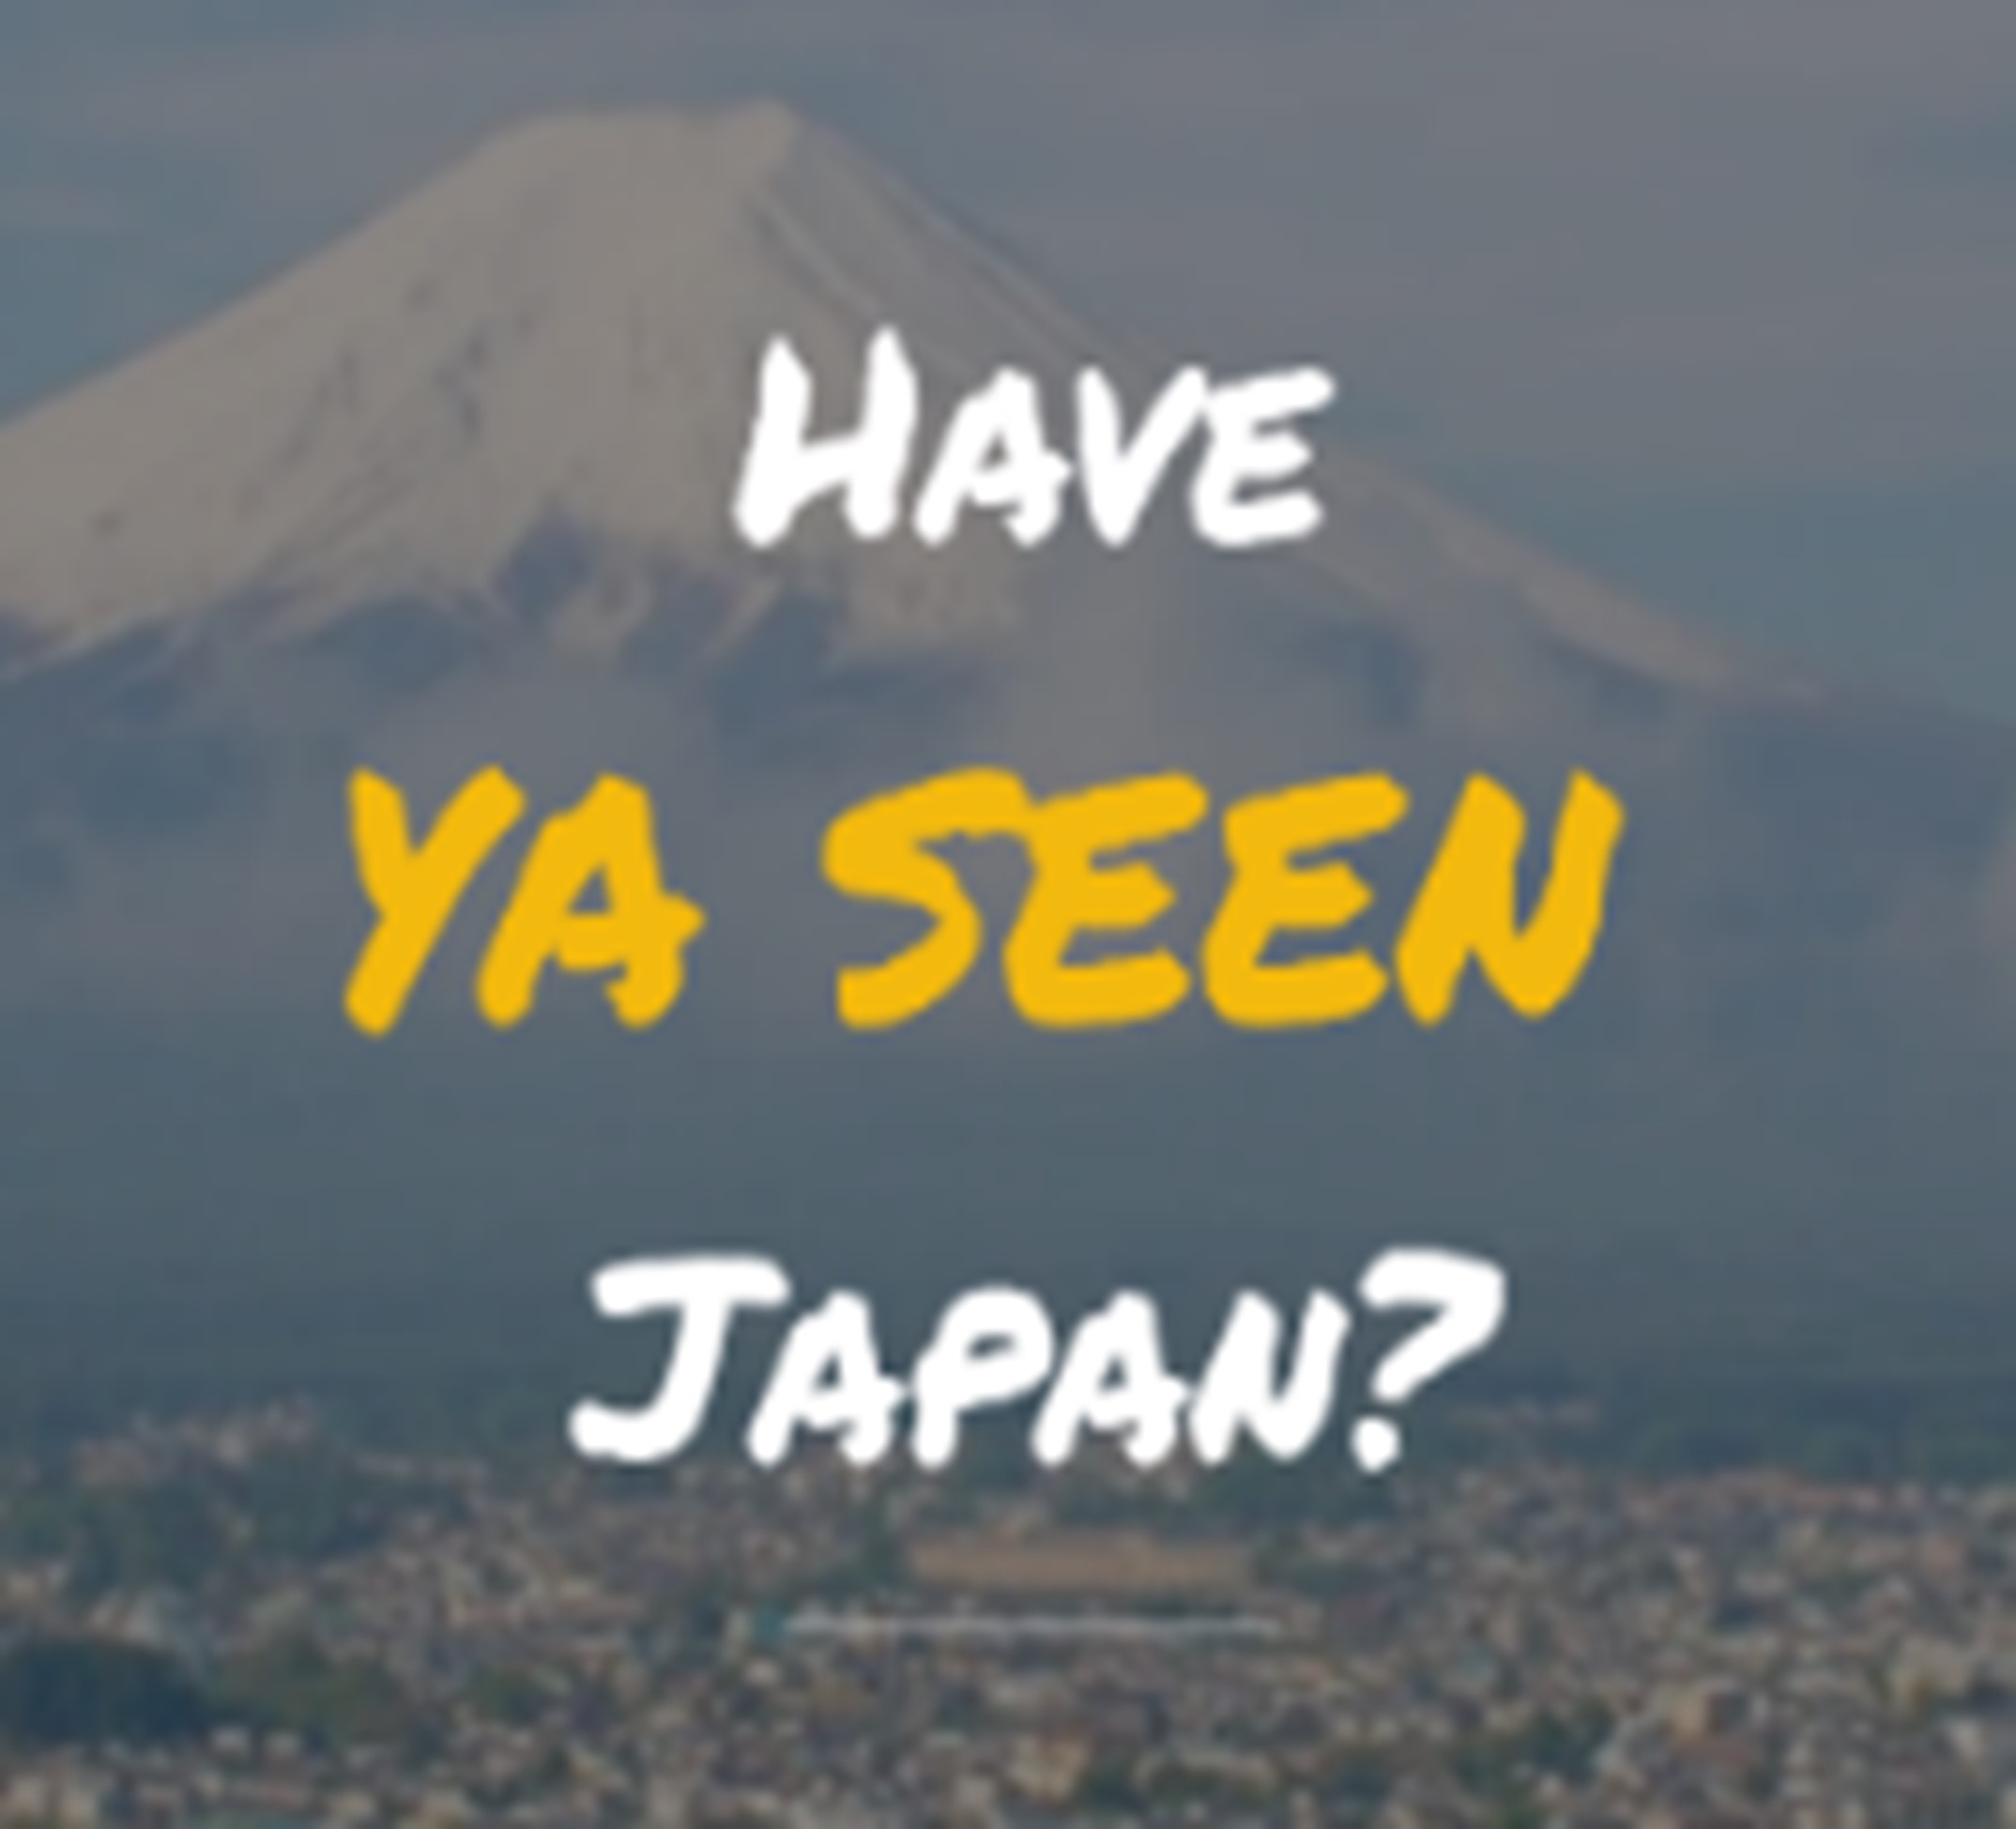 Have Ya Seen Japan